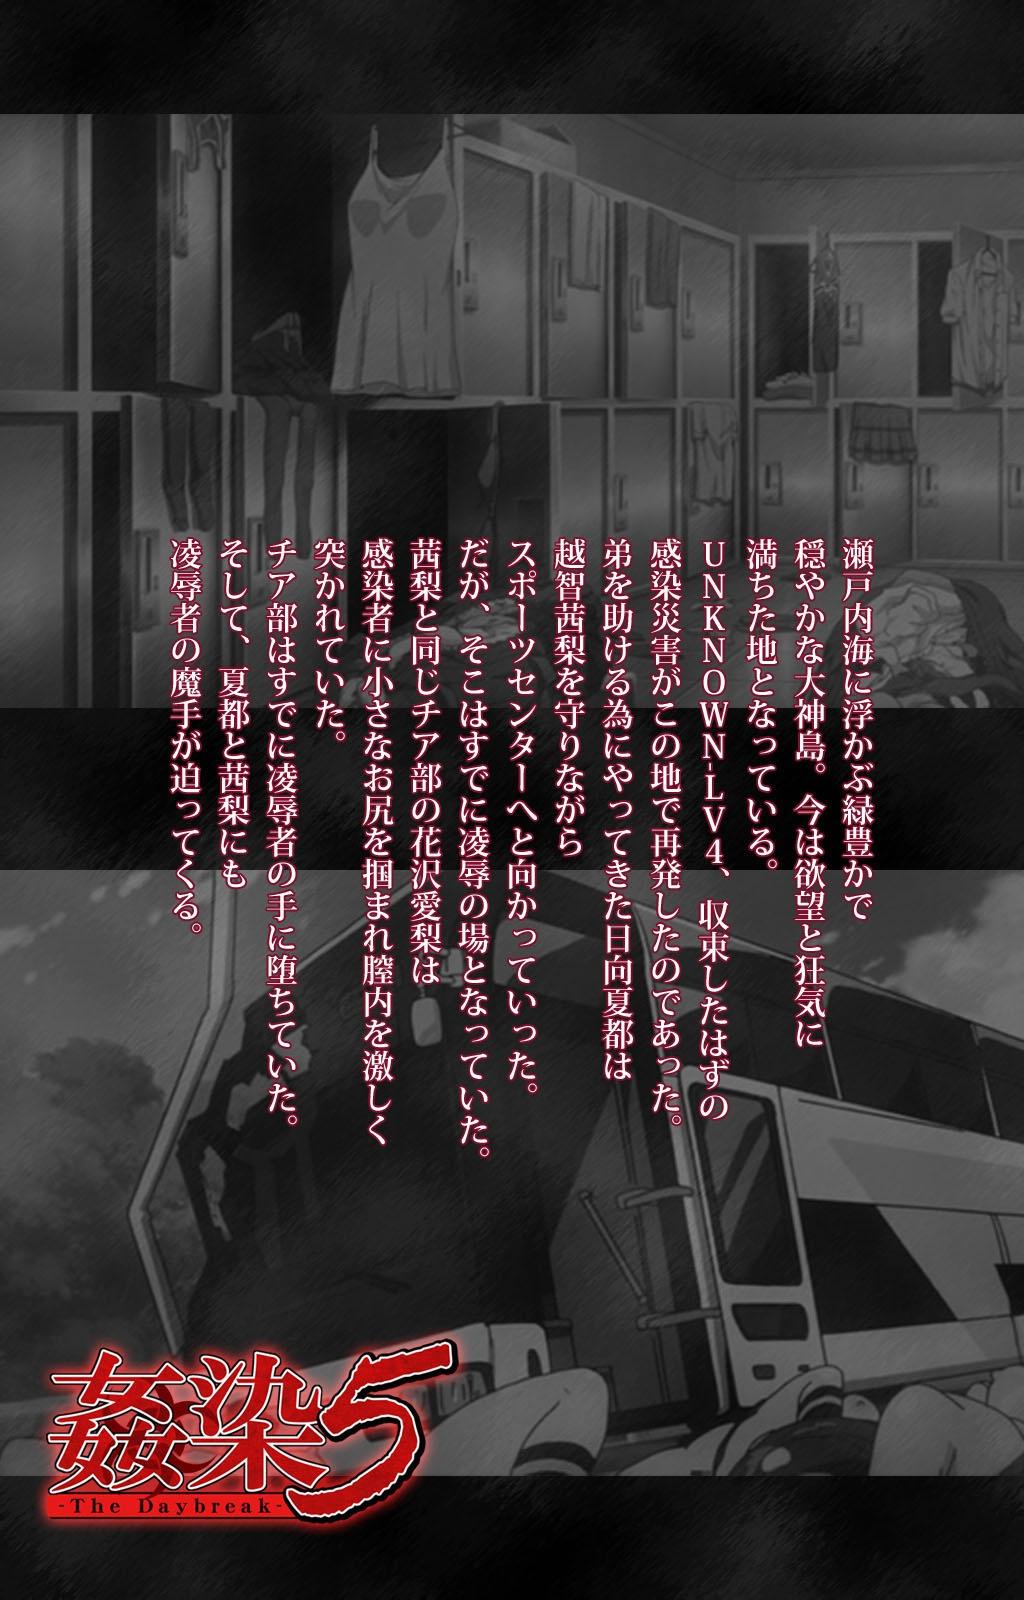 [SPEED] [Full Color Seijin Han] Kansen 5 -The Daybreak- Complete Ban [Digital] 1